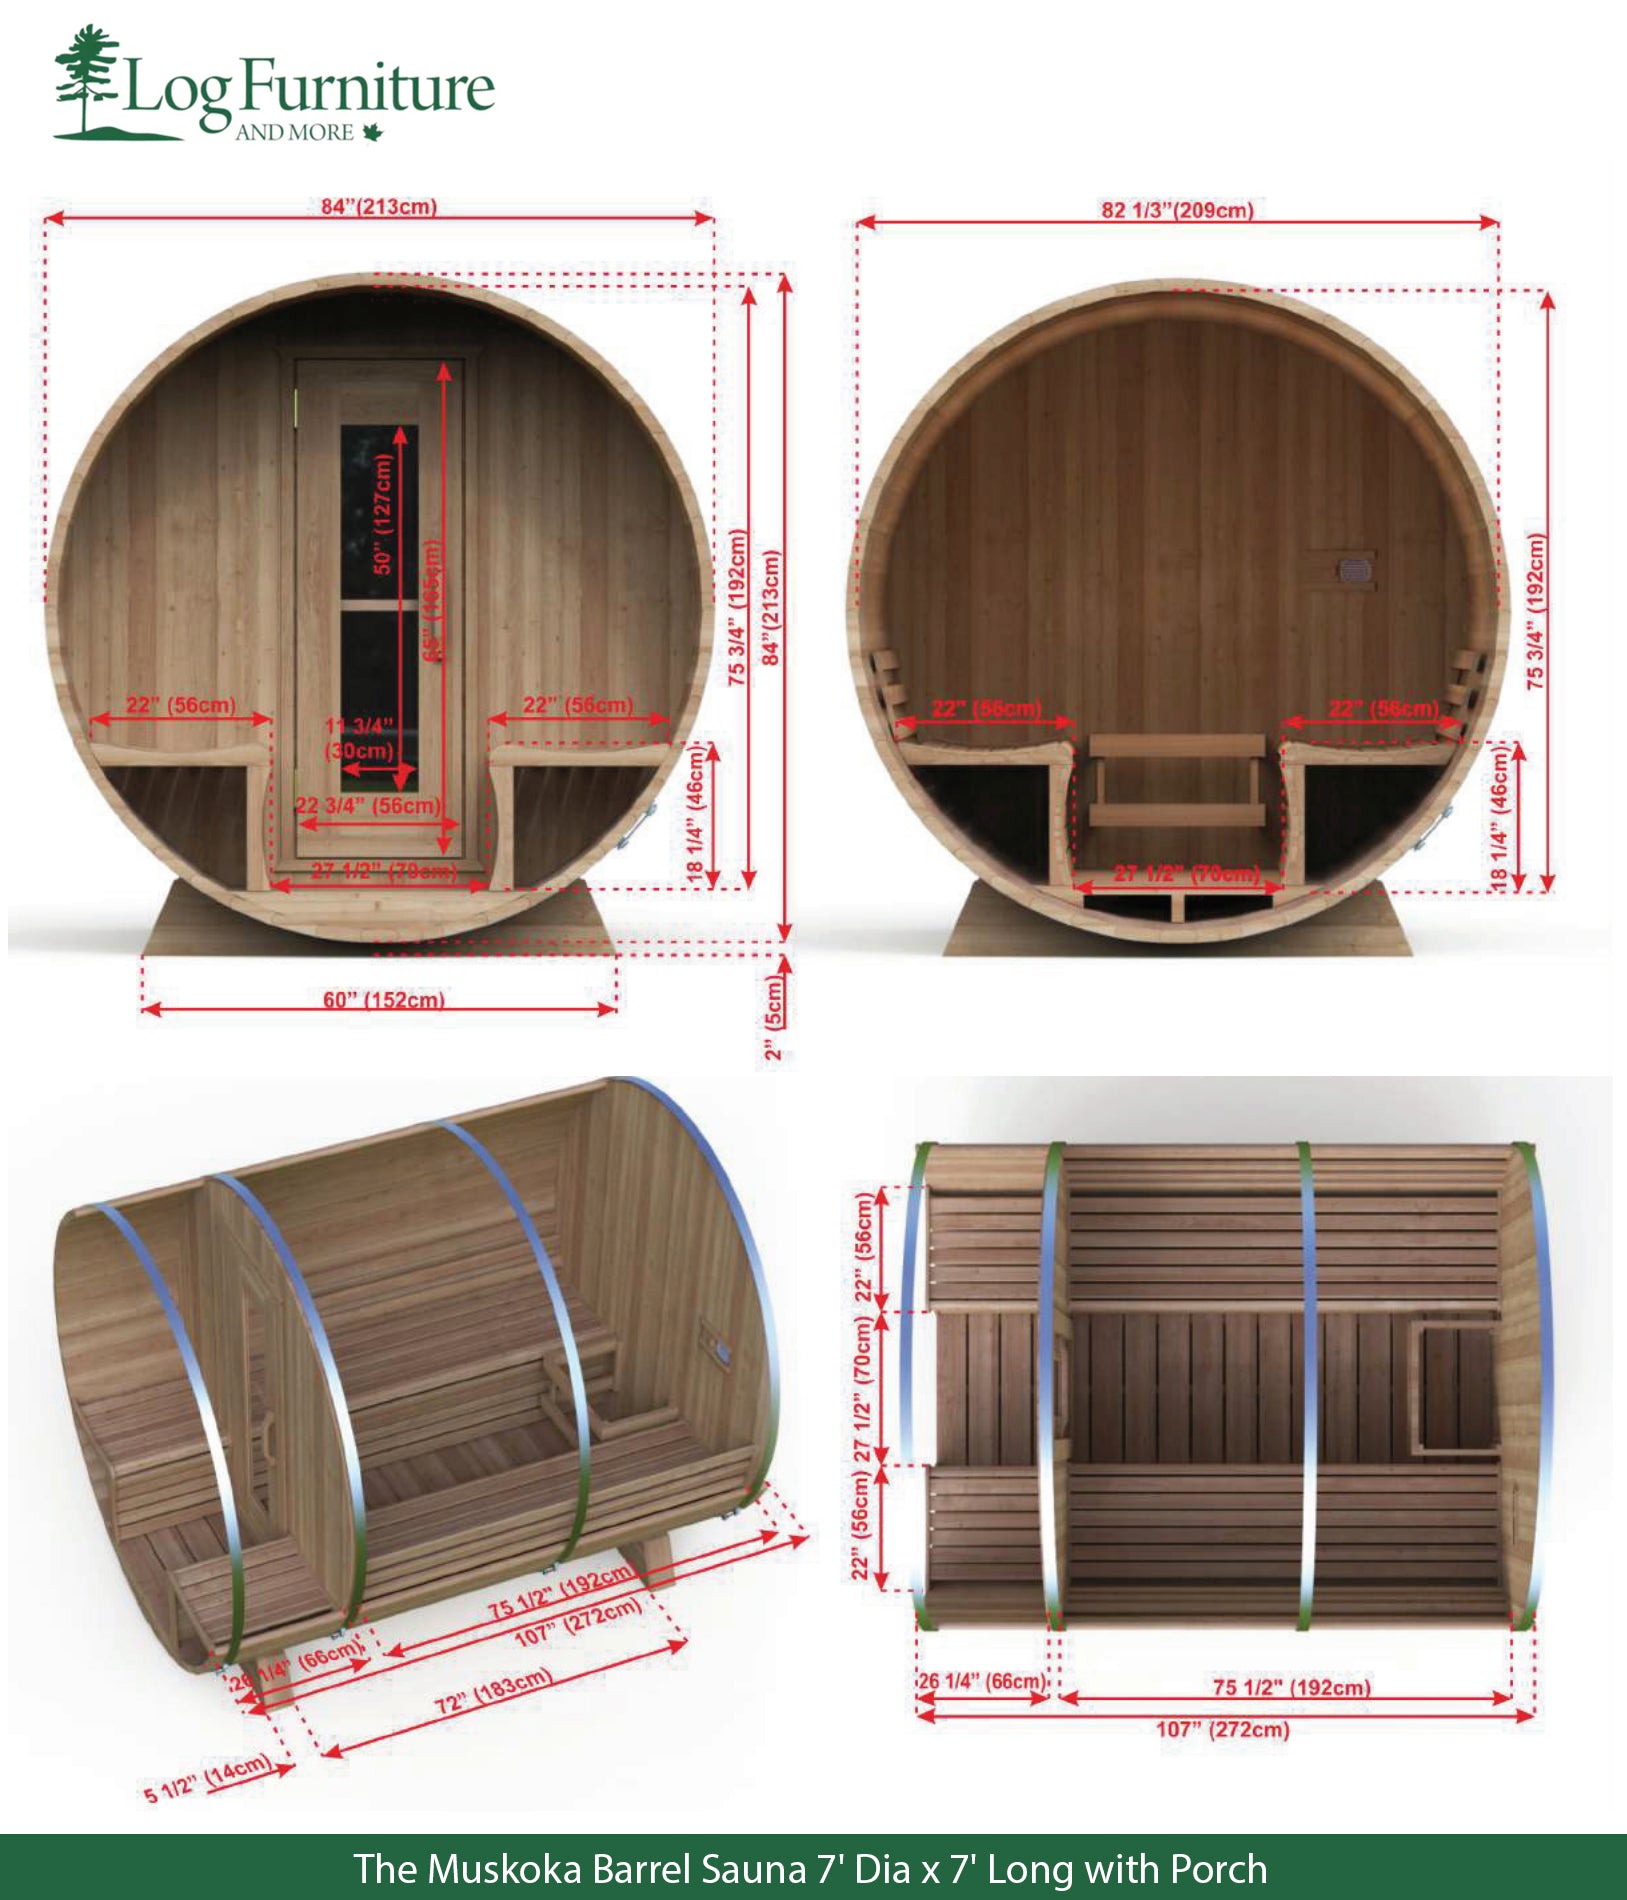 The Muskoka Barrel Sauna 7' Dia x 7' Long with Porch